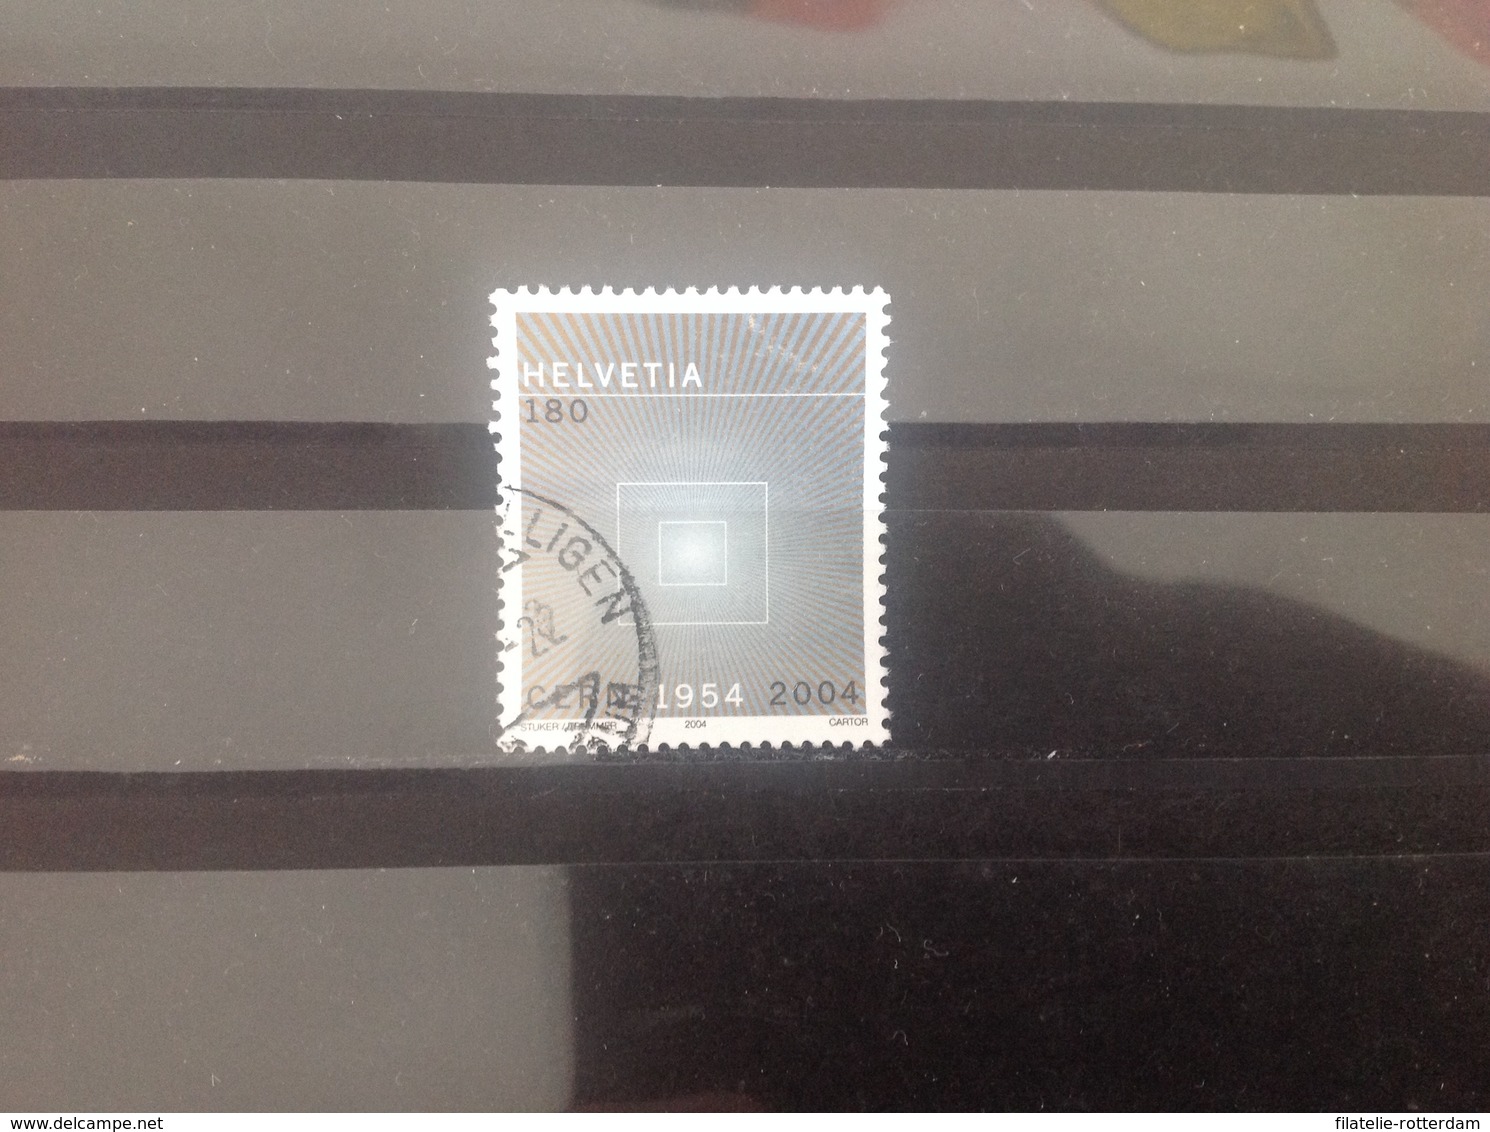 Zwitserland / Suisse - Europees Kernonderzoek (180) 2004 - Used Stamps